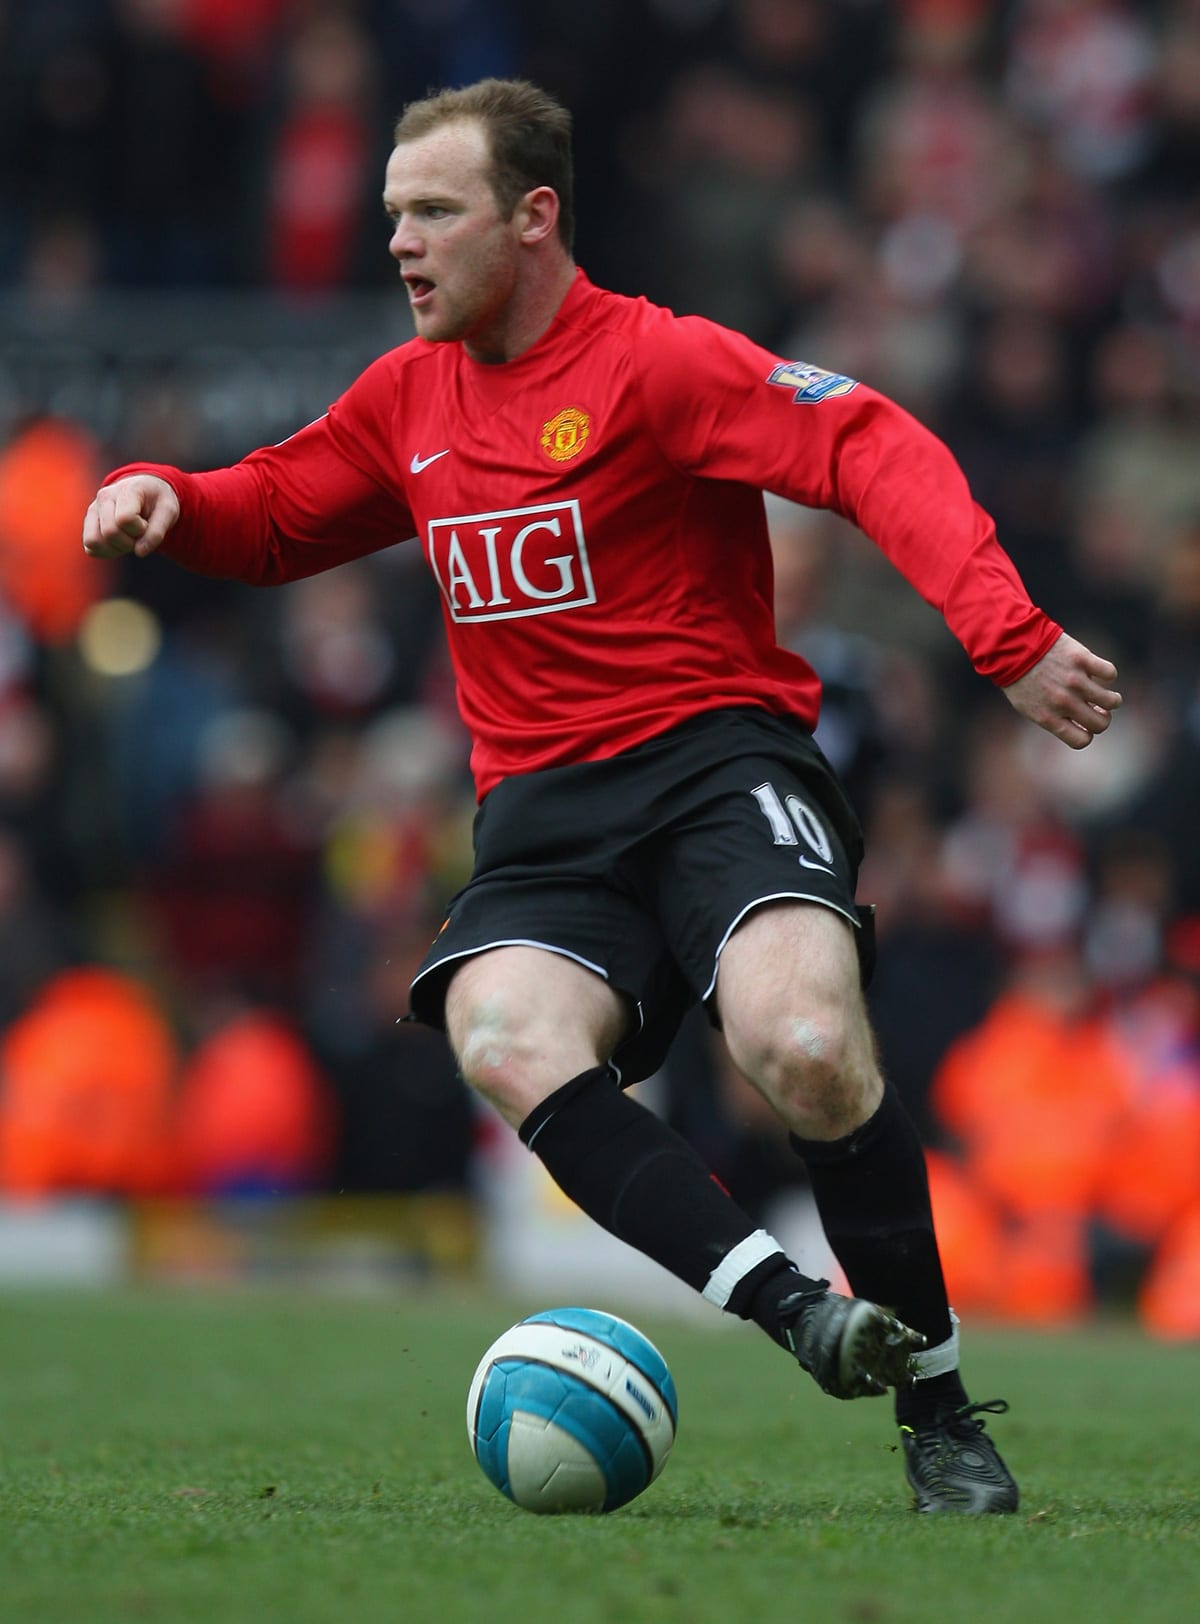 World of Sports: Wayne Rooney